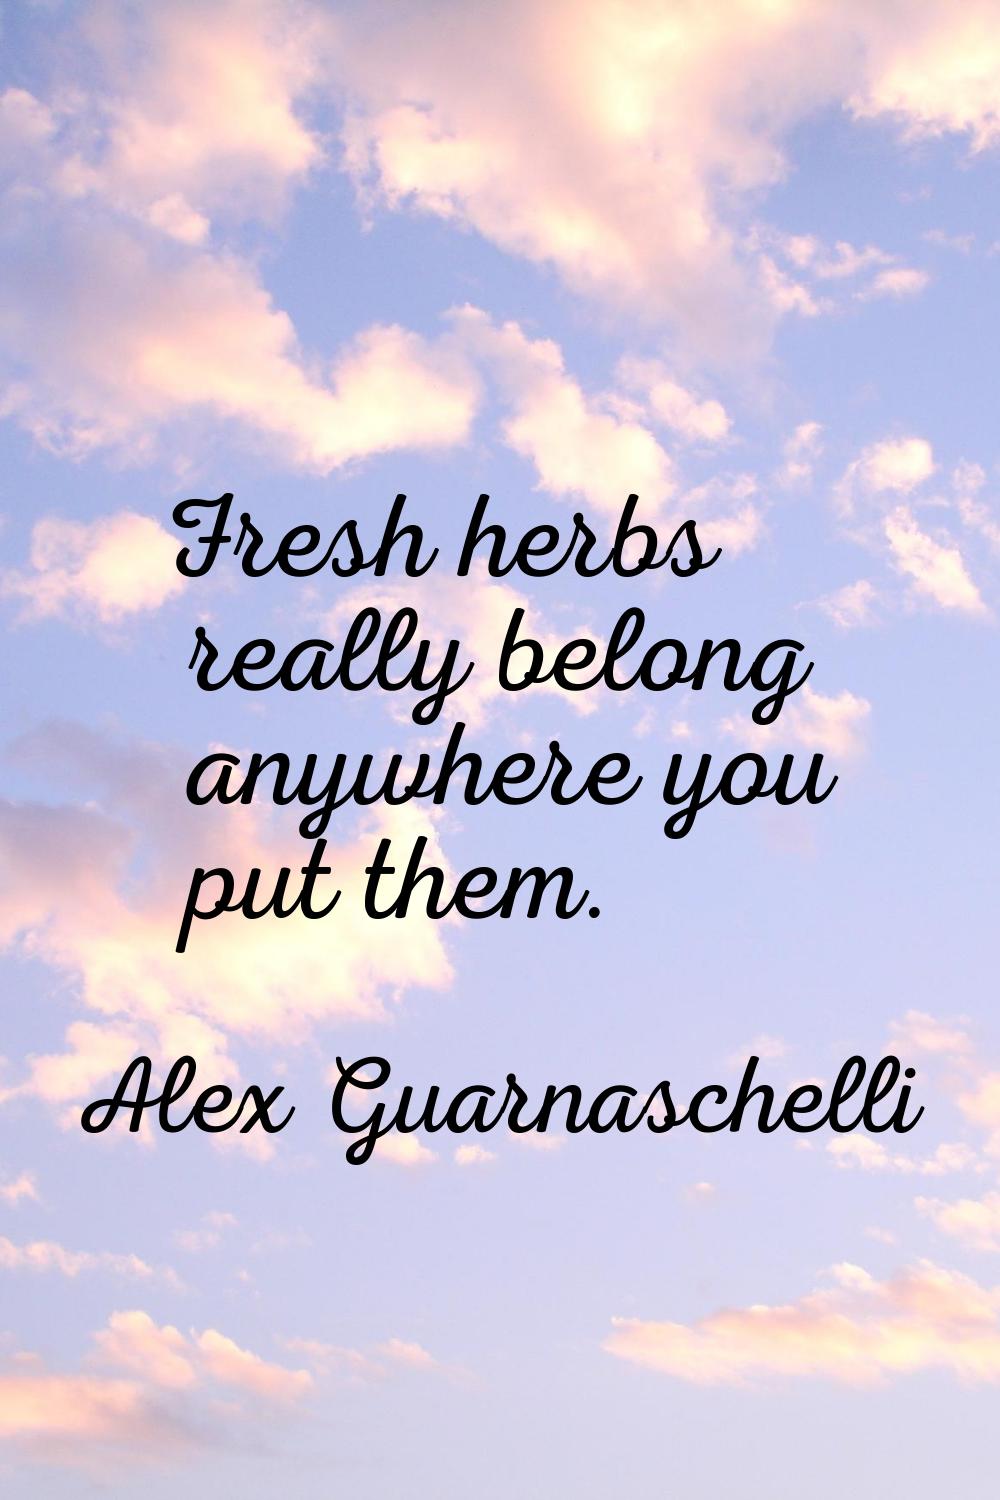 Fresh herbs really belong anywhere you put them.